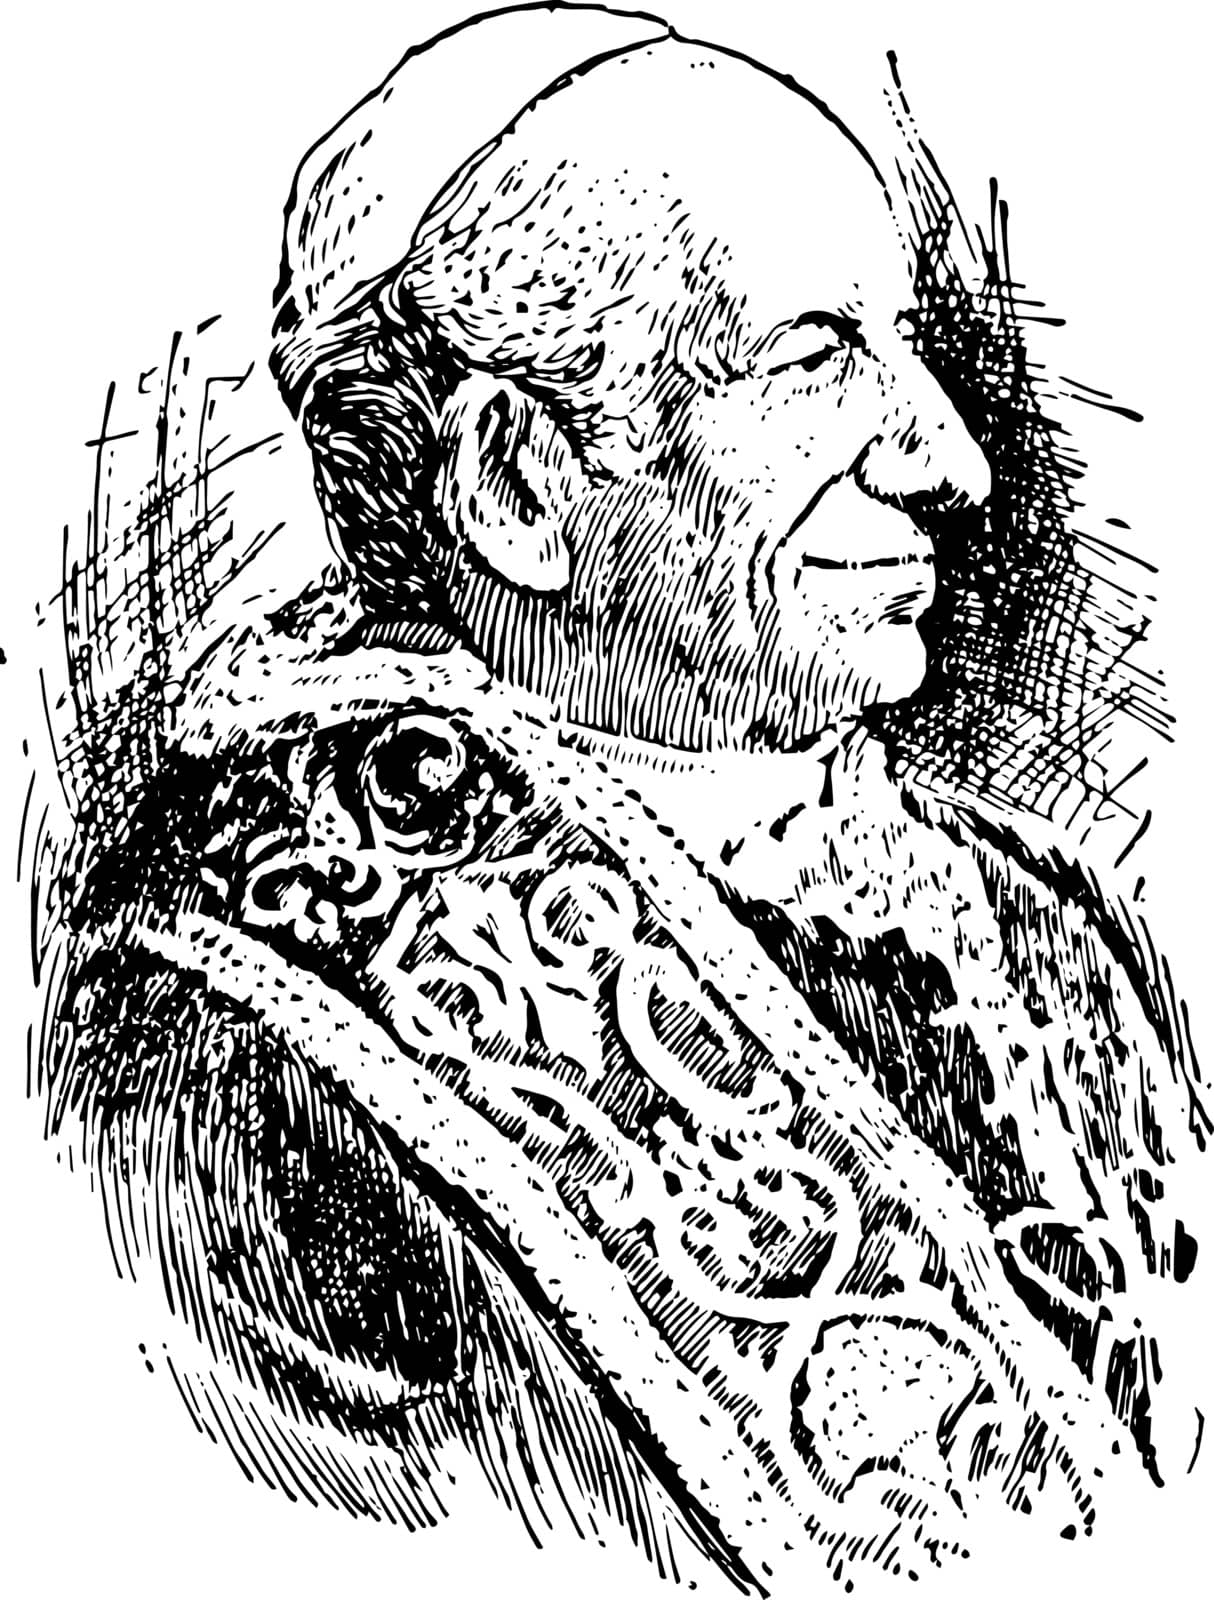 Leo XIII vintage illustration by Morphart